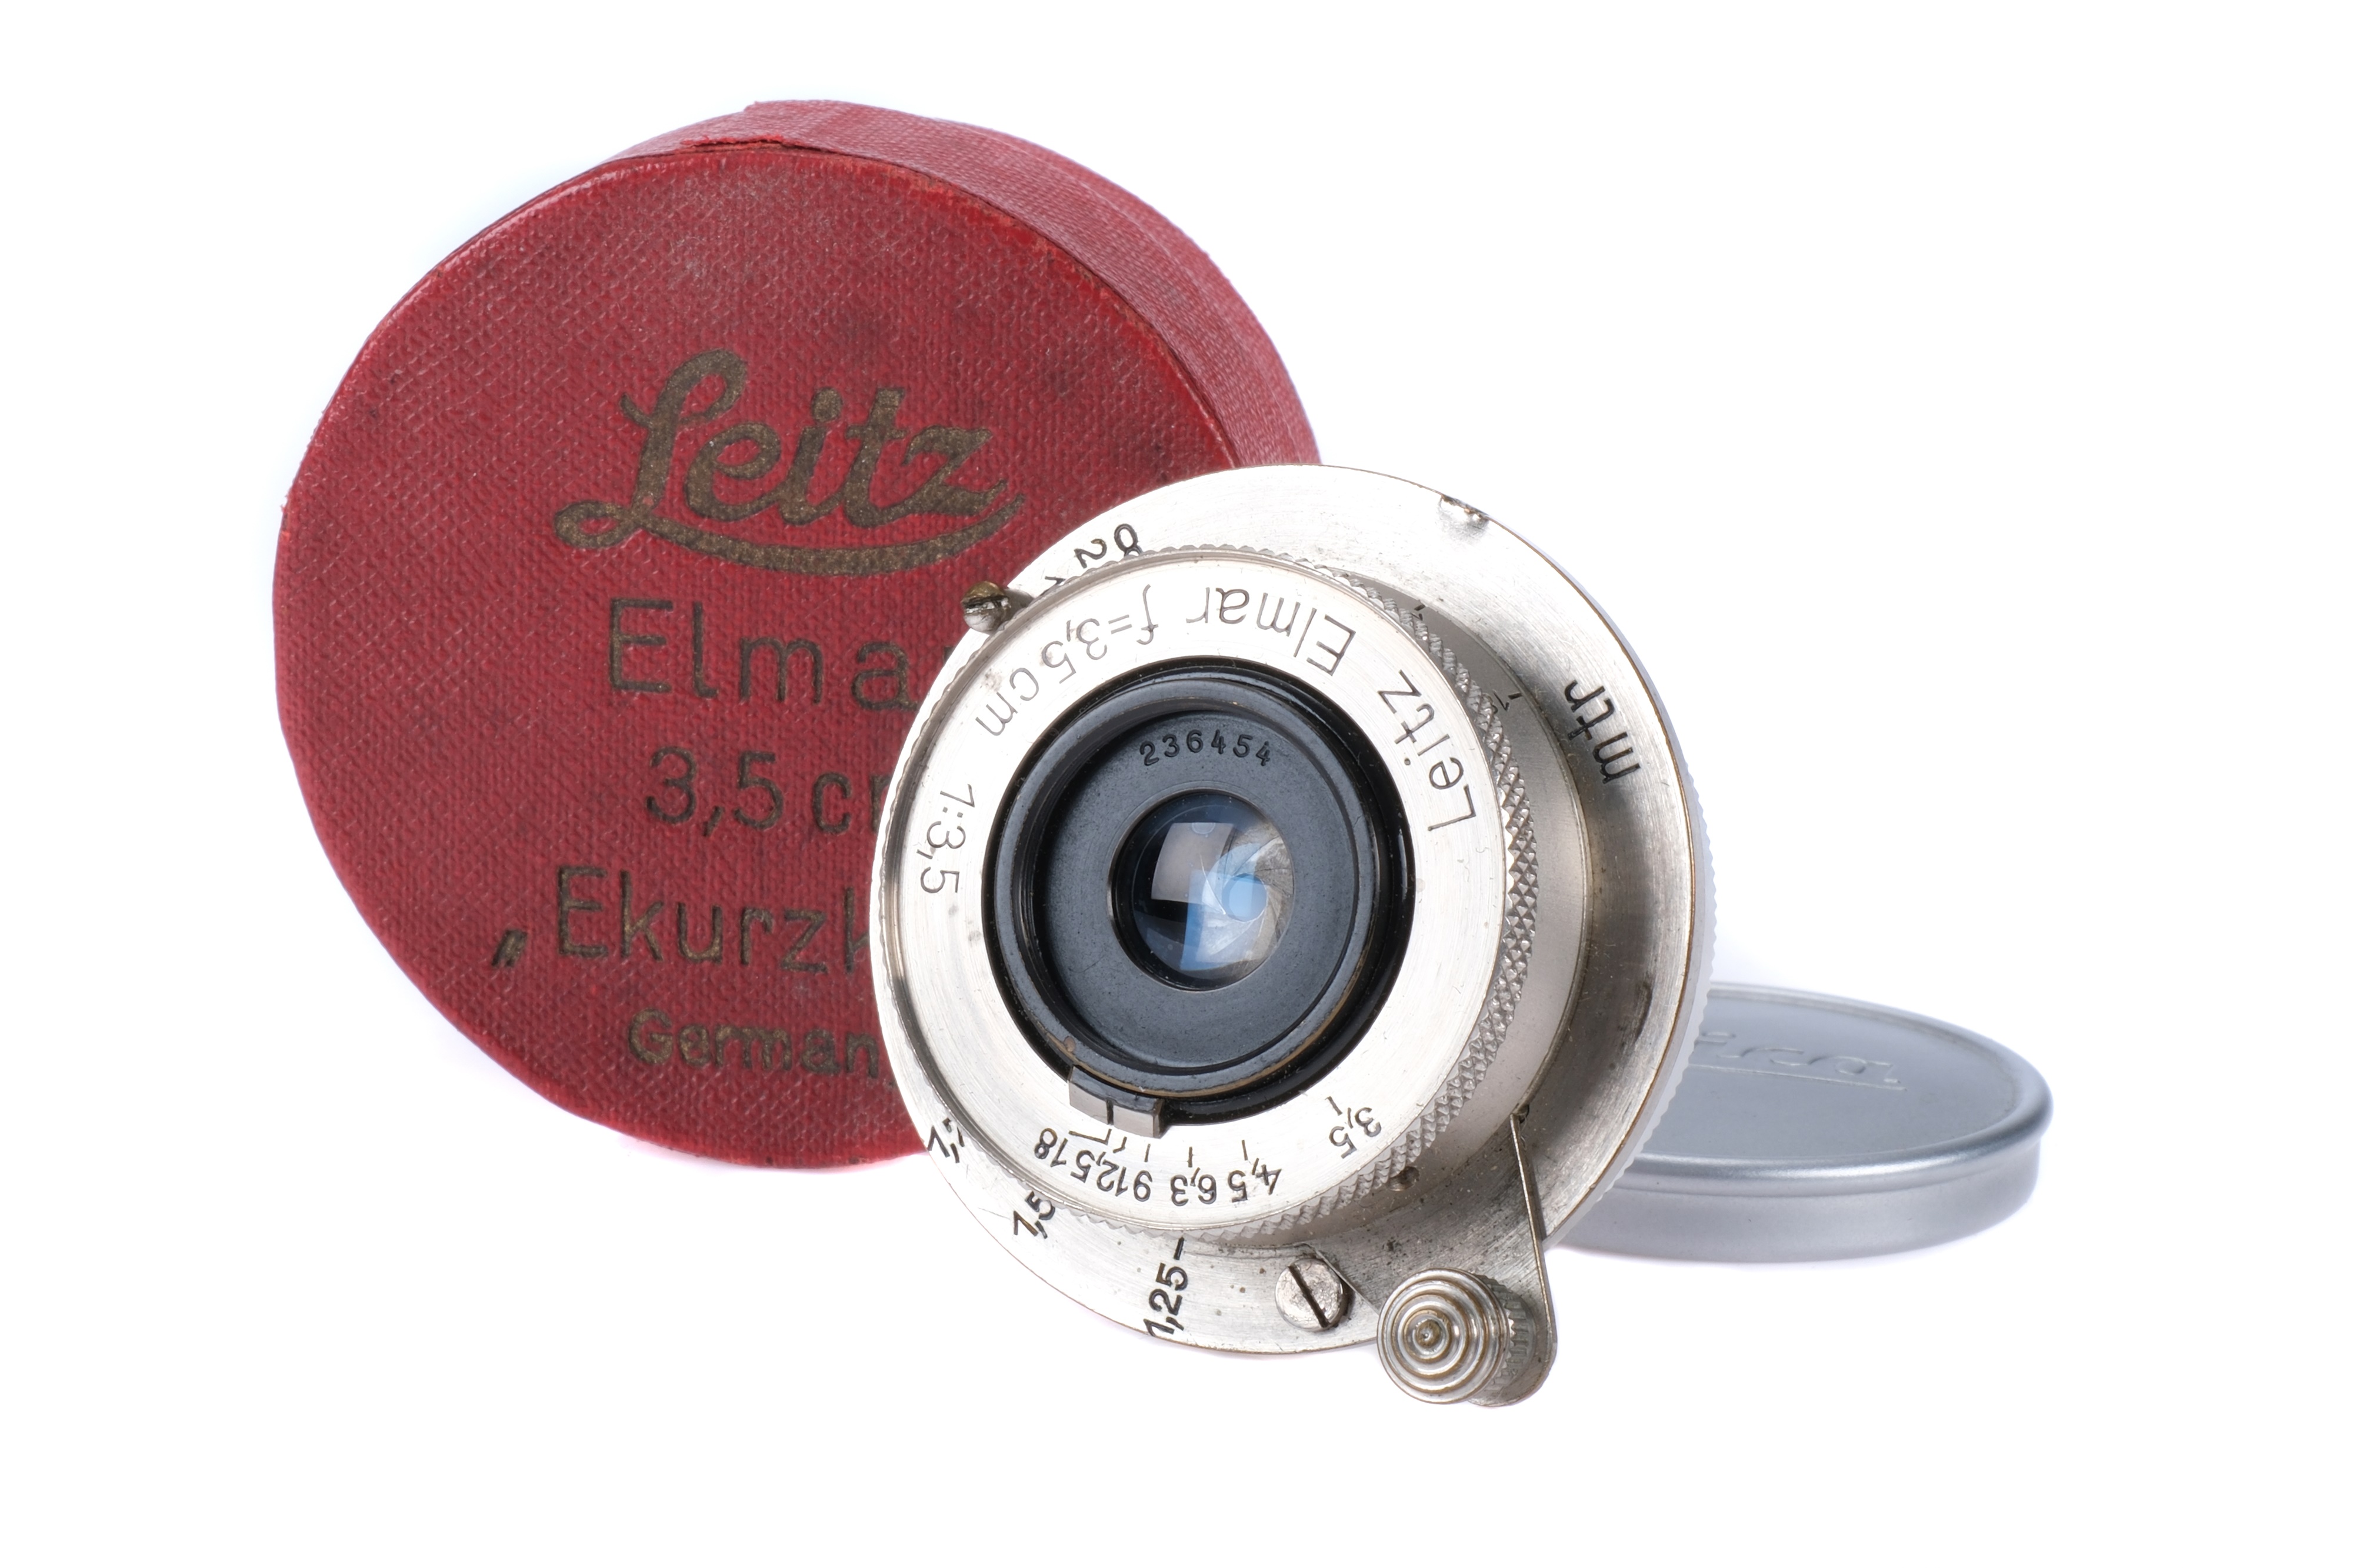 A Leitz Elmar f/3.5 35mm Lens,